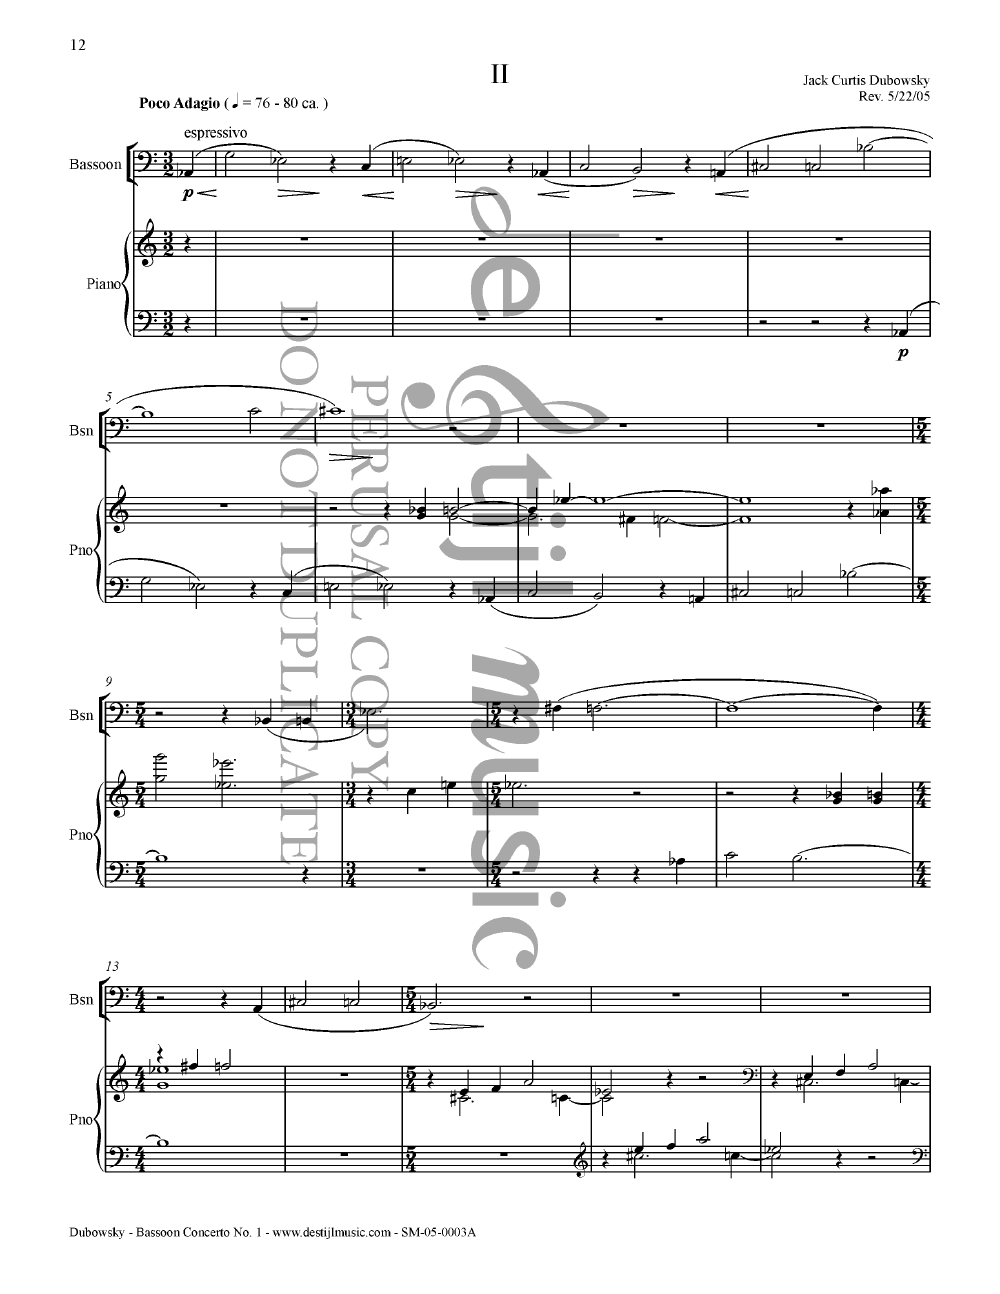 Bassoon Concerto No. 1 Bassoon/ Piano Reduction